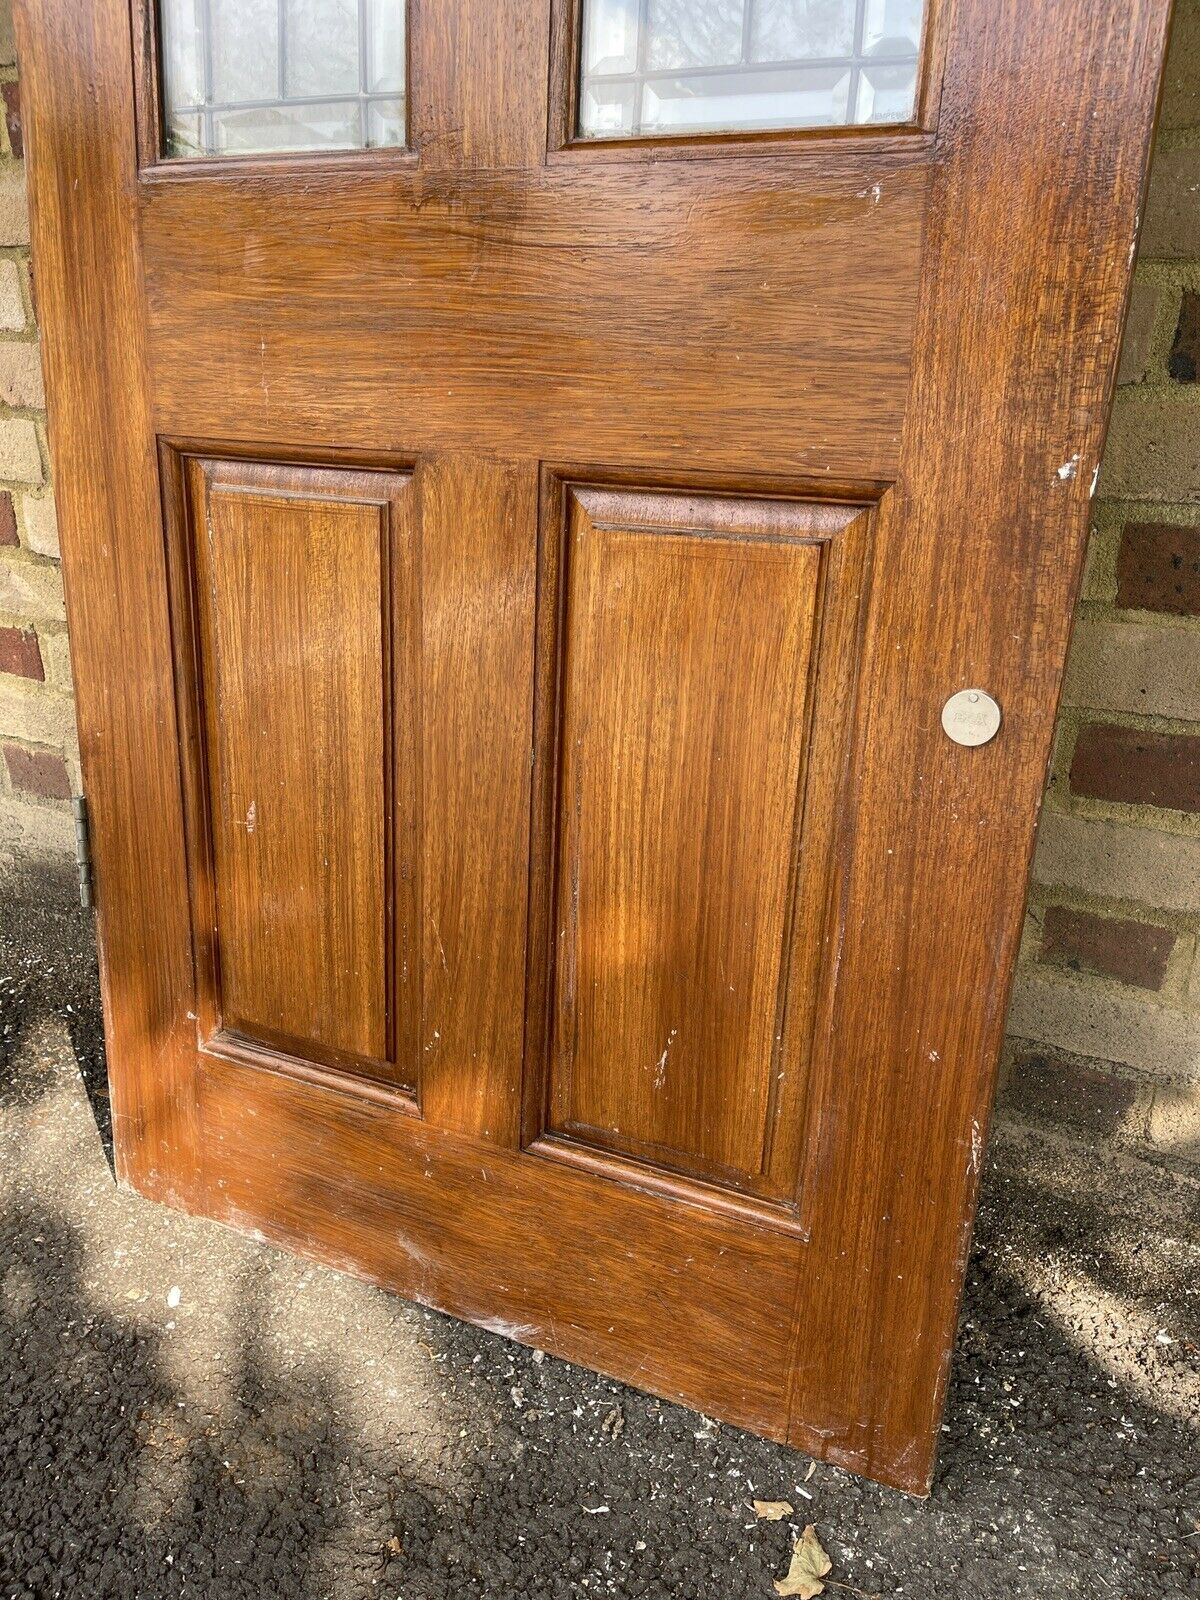 Reclaimed Old Victorian Edwardian Wooden Leaded Glass Front Door 2030mm x 790mm